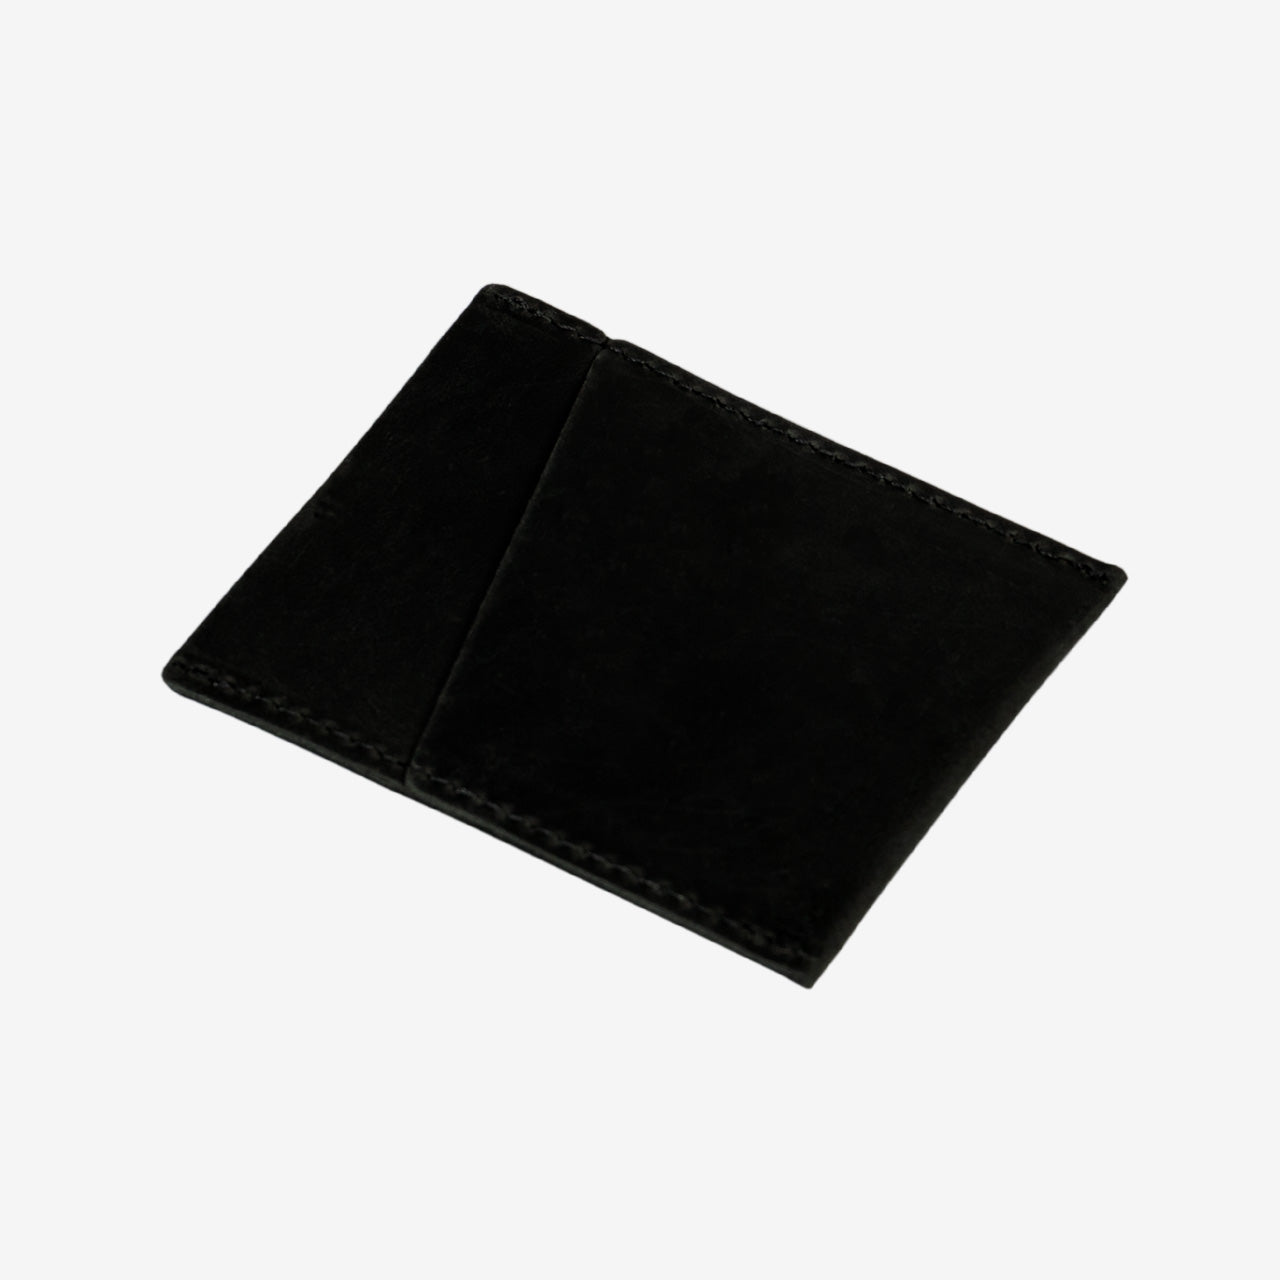 sleepwalk ltd card case black leather